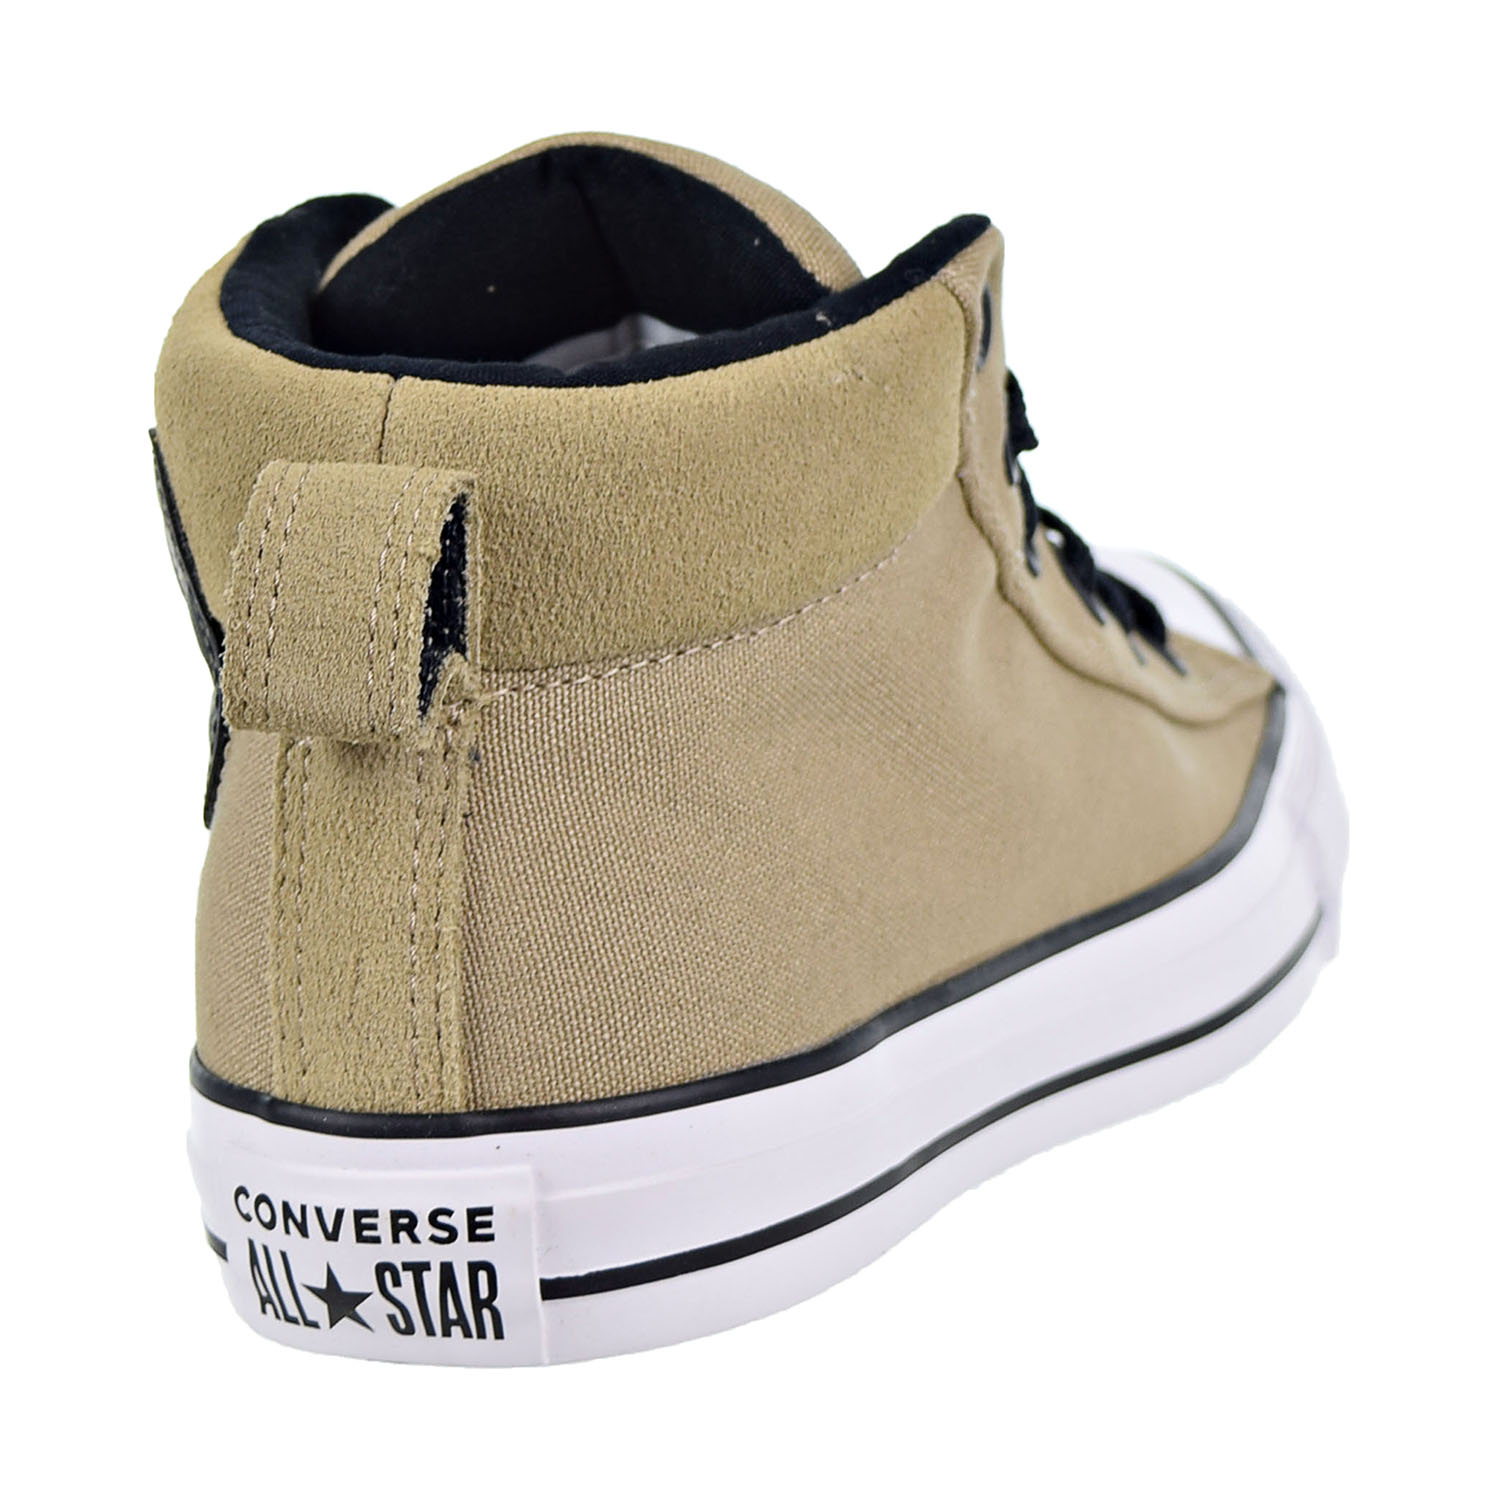 Converse Chuck Taylor All Star Street Mid Unisex Shoes Khaki/Black/White 163401c - image 3 of 6